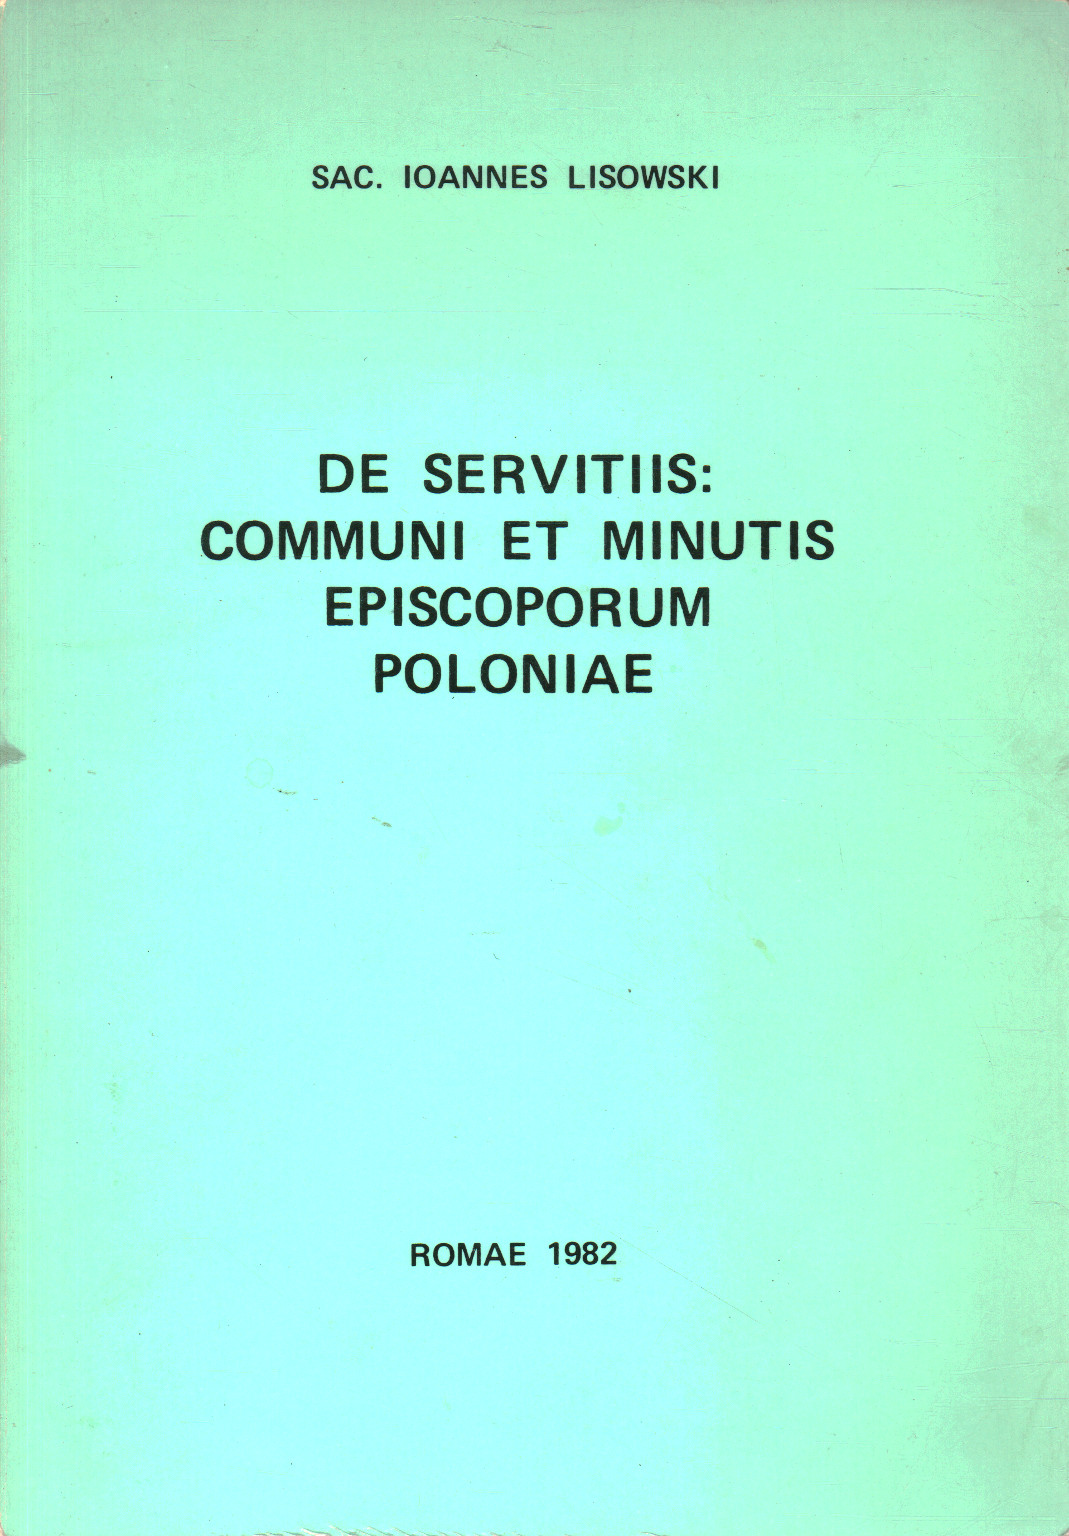 De servitiis: communi et minutis episcoporum polon, Ioannes Lisowski